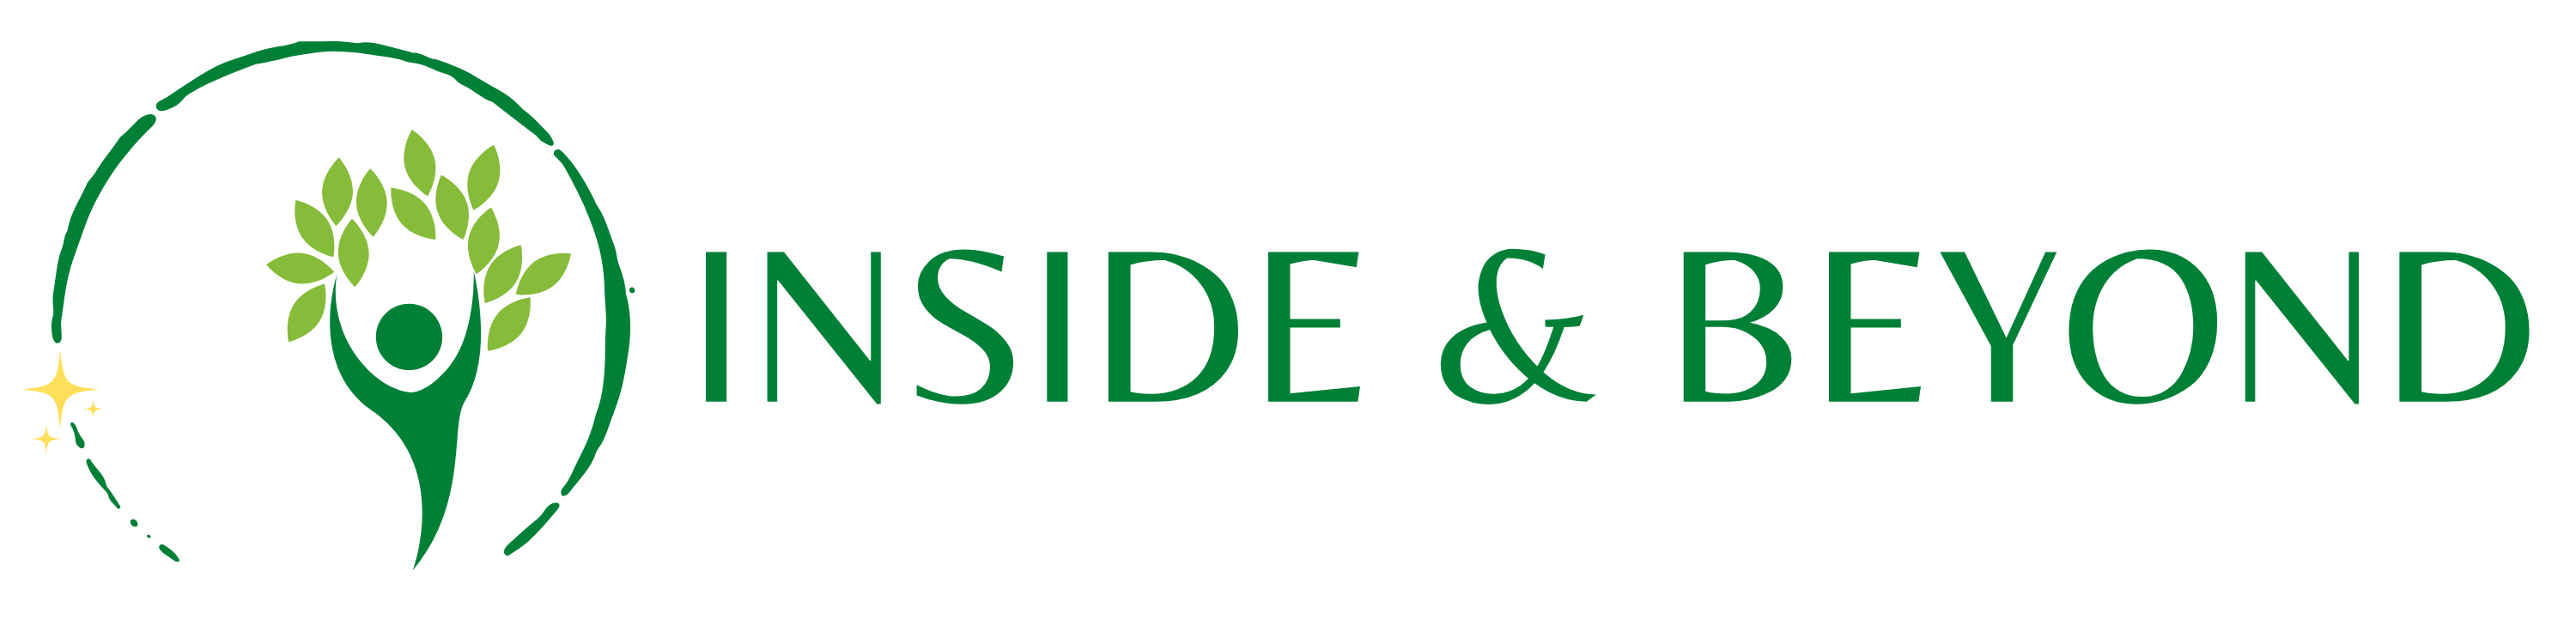 Inside & Beyond logo